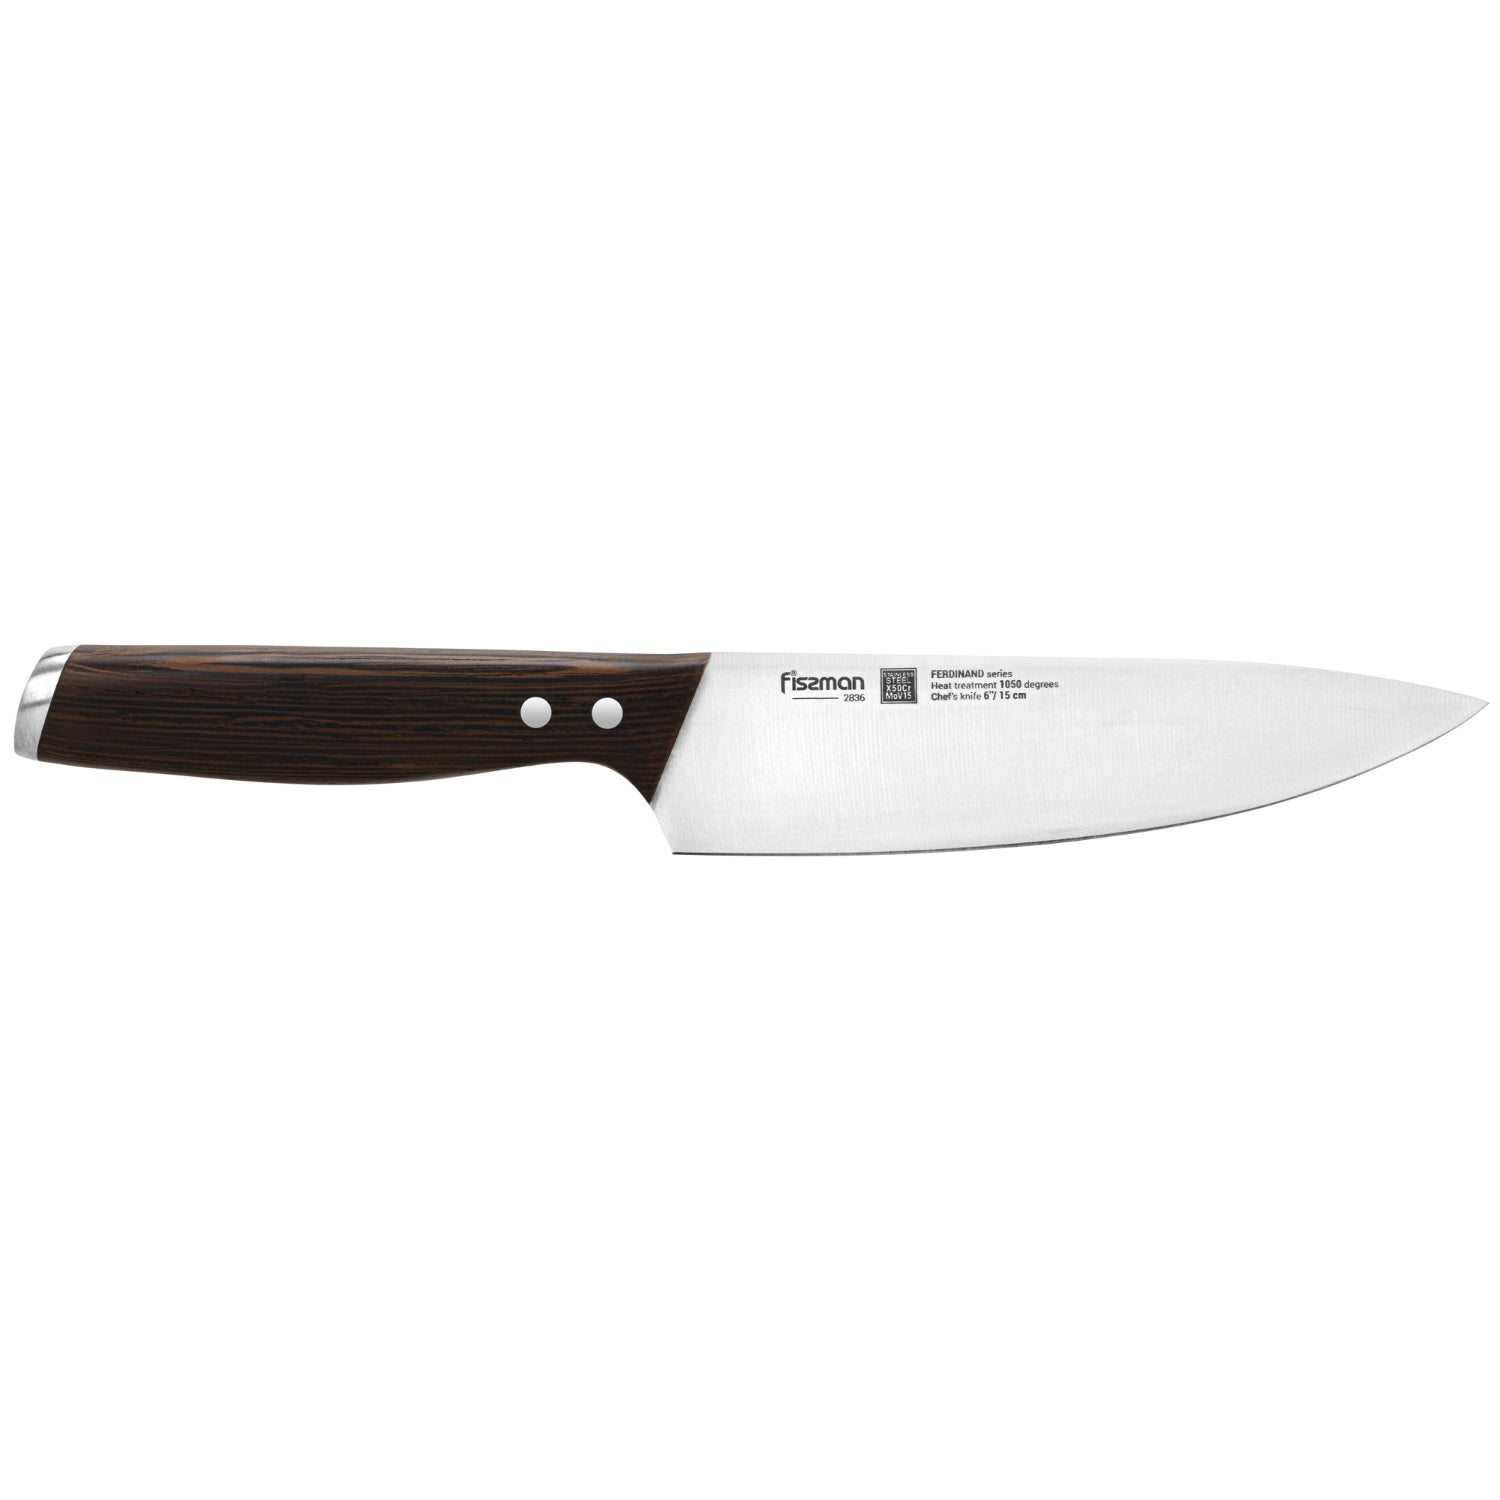 Fissman 6'' Chef's Knife Ferdinand - X50CrMoV15 steel